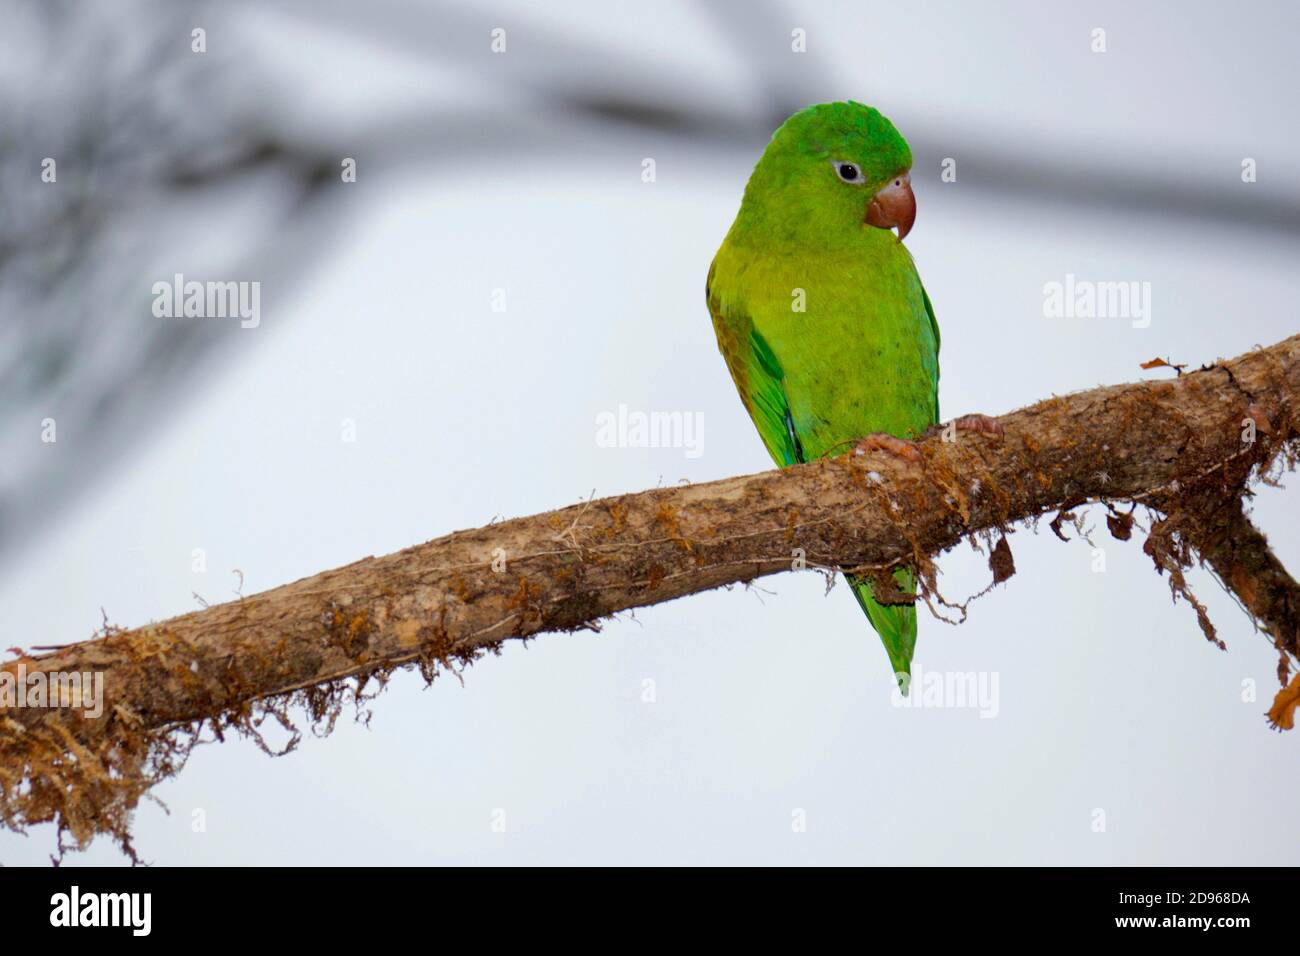 Oranged-chinned Parakeet, Tovi parakeet, Brotogeris jugularis, Tropical Rainforest, Costa Rica, Central America, America. Stock Photo